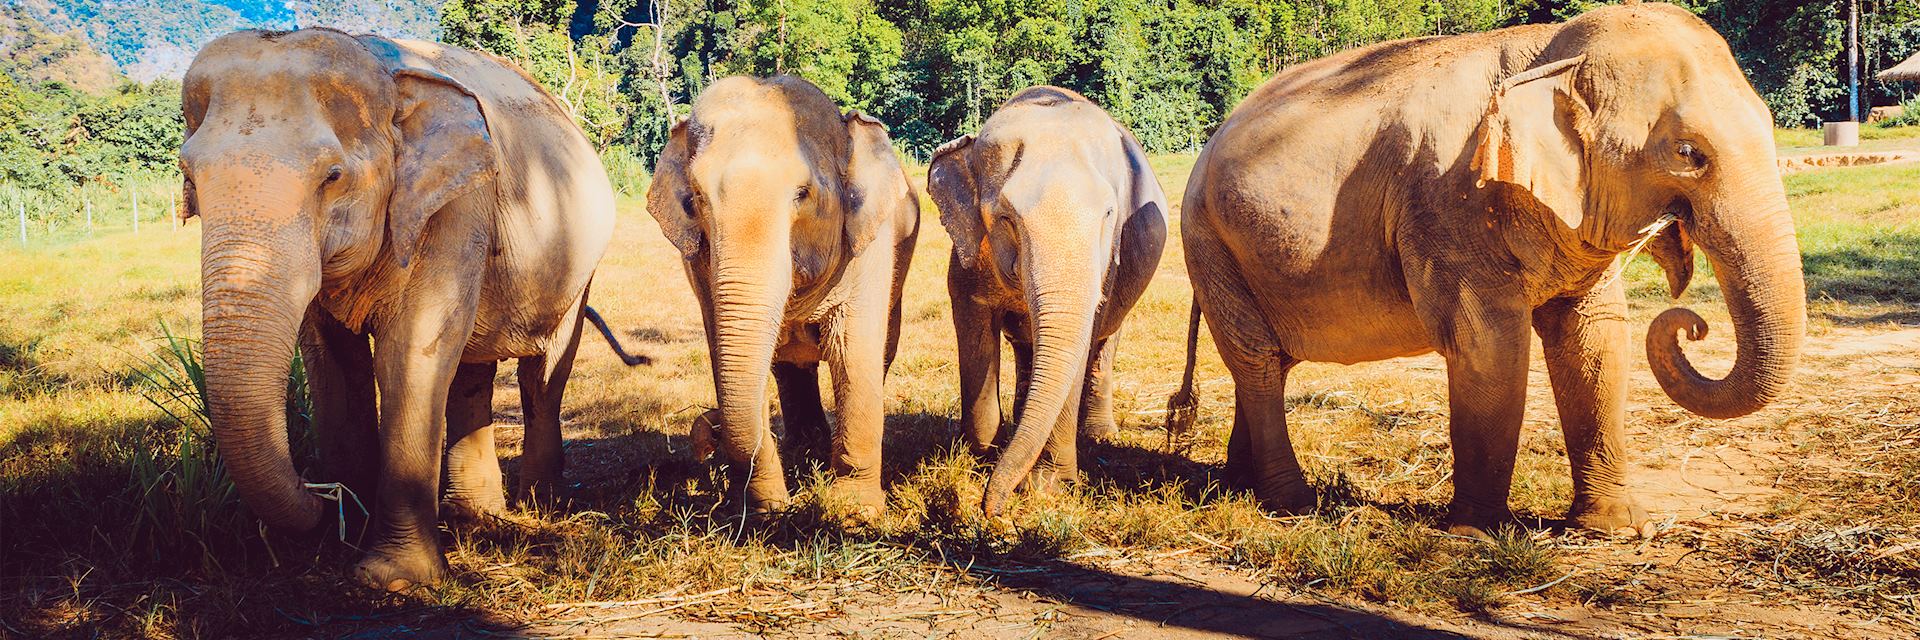 Elephants at Elephant Hills Tented Camp